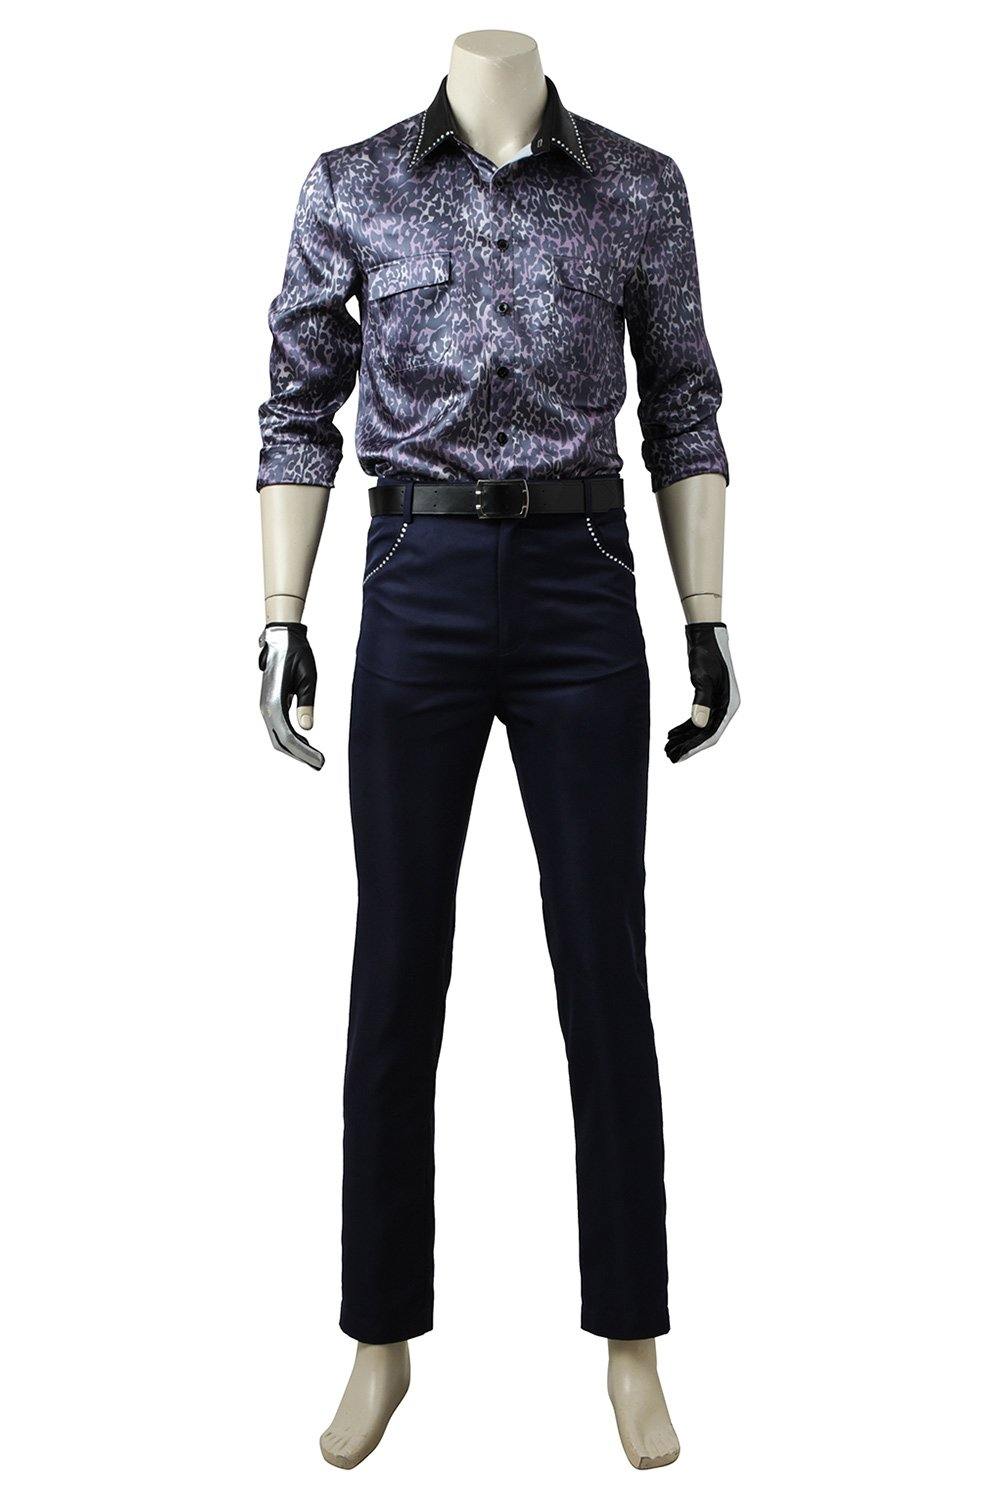 Final Fantasy XV Ignis Scientia Uniform Cosplay Kostüm Full Set Schwarz - cosplaycartde